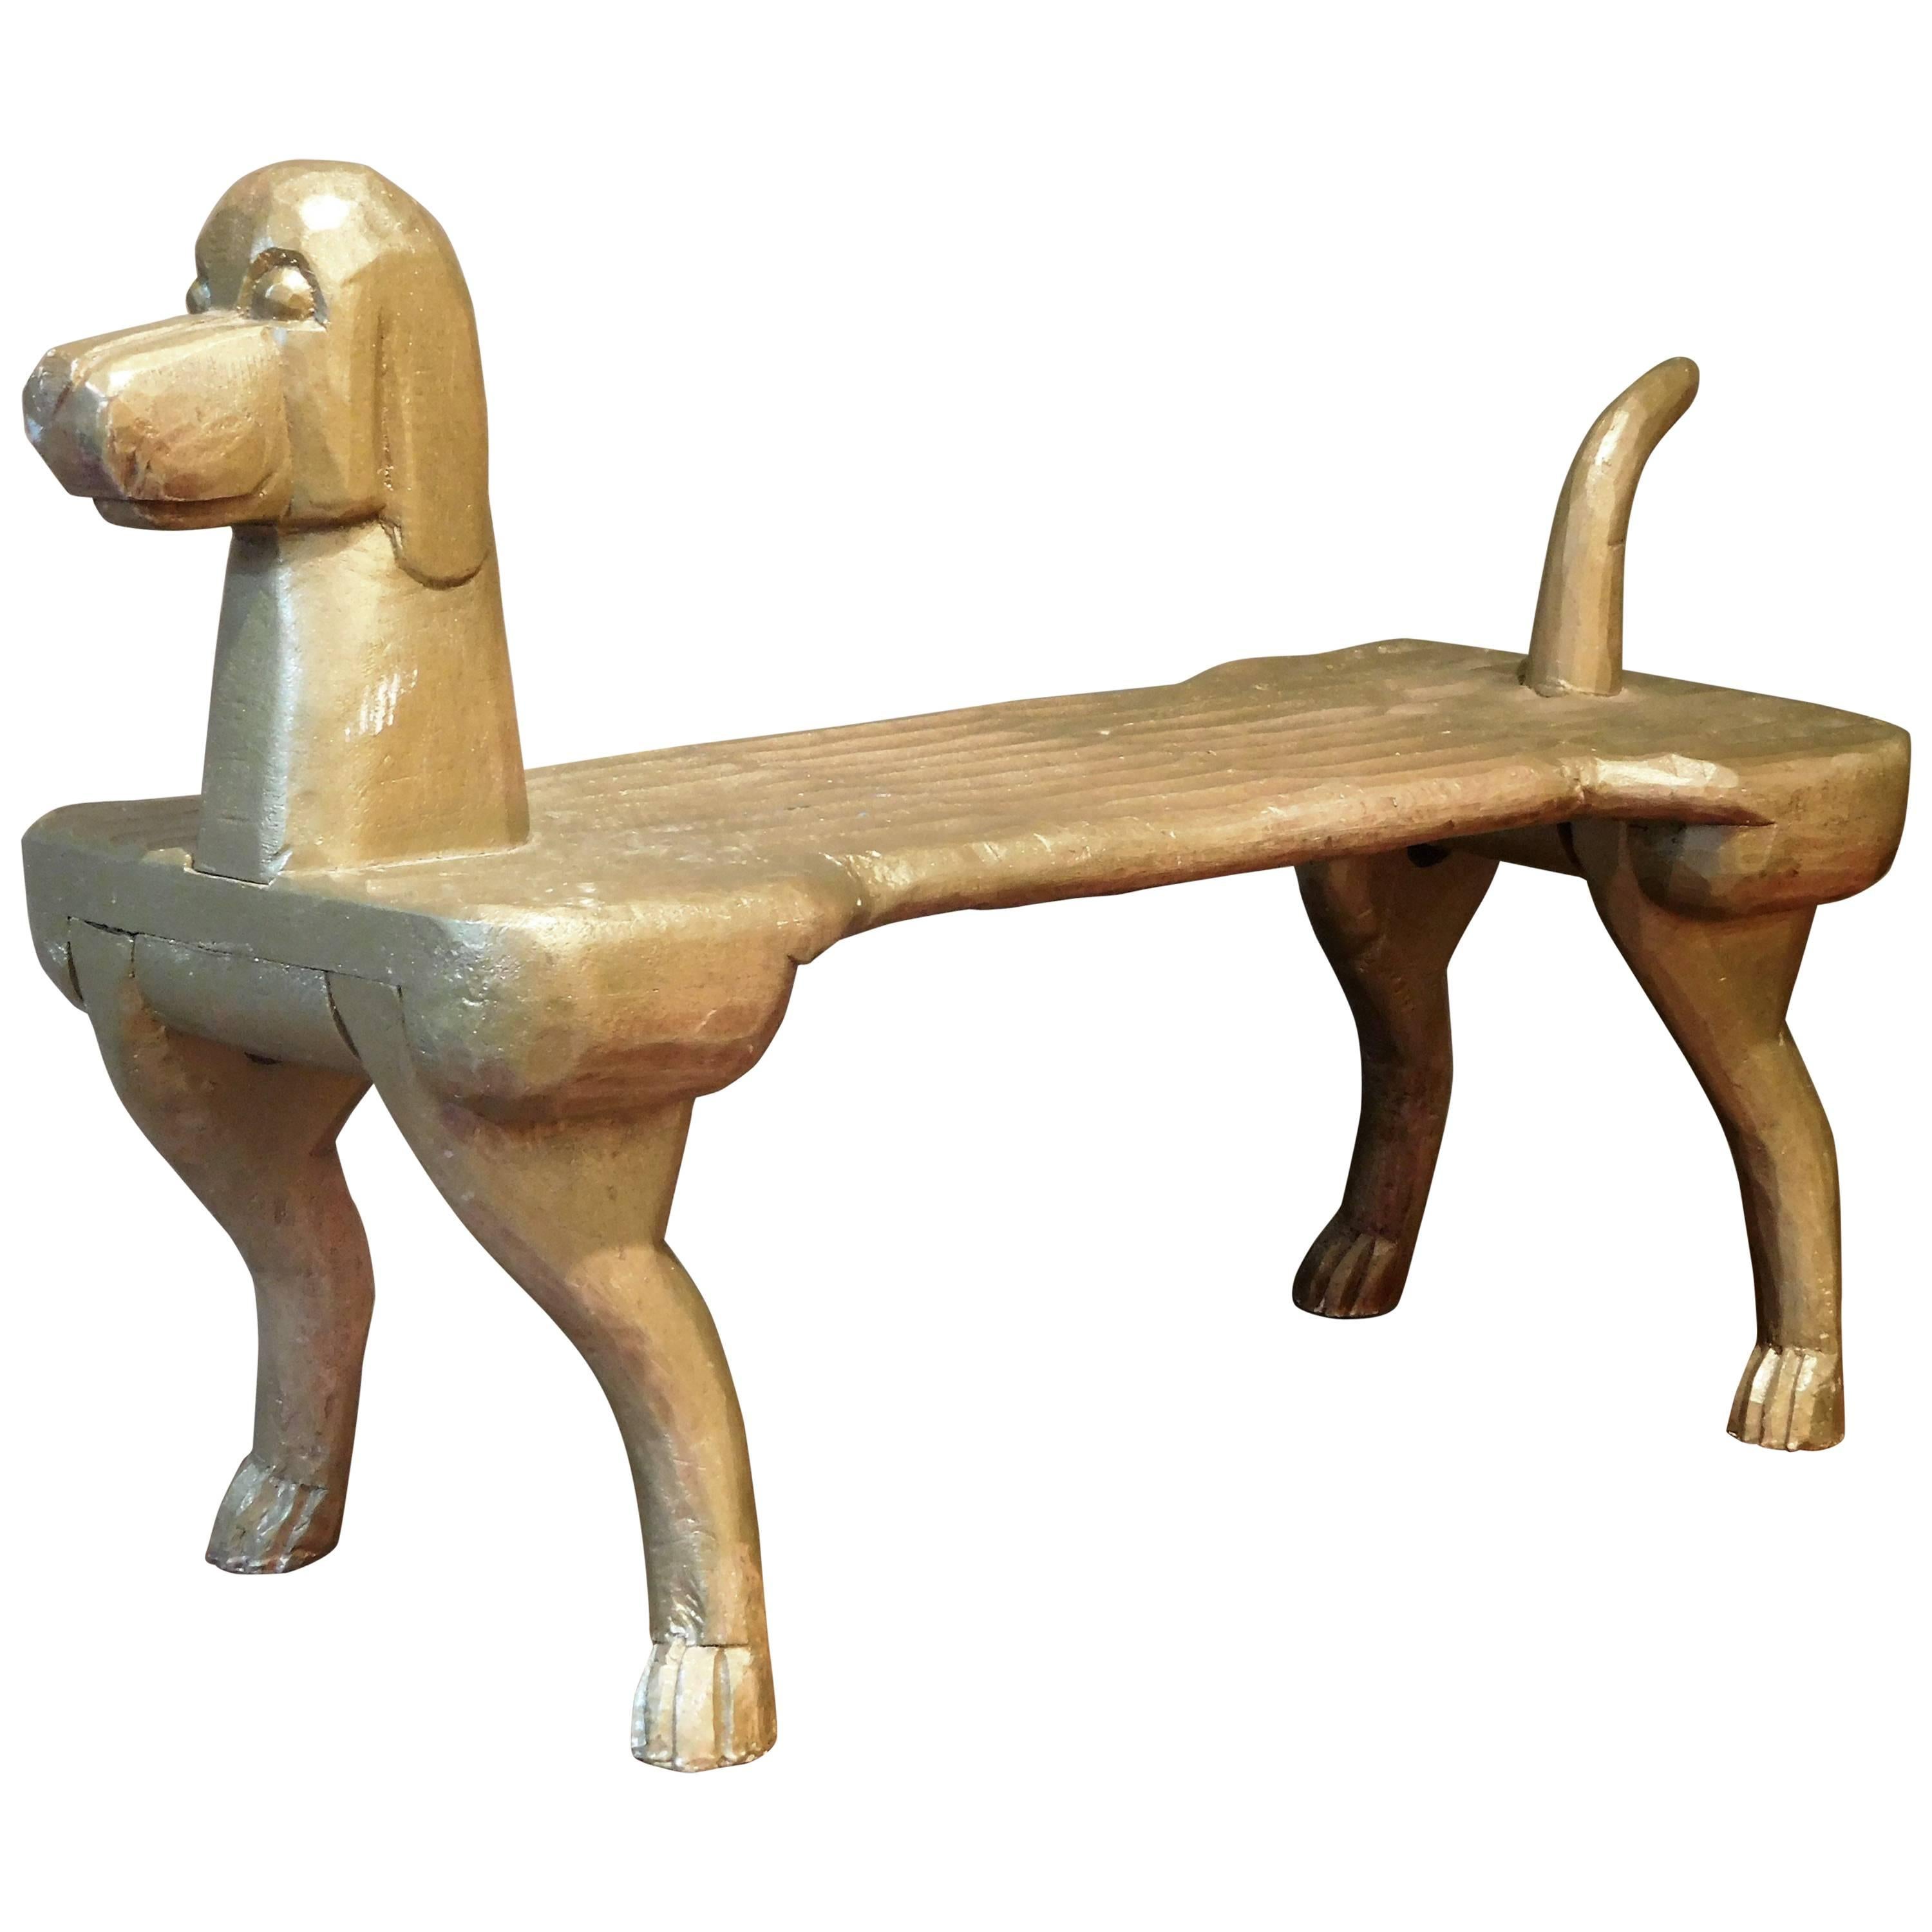 Hand-Carved Postmodernism Dog Footstool, Stephen Huneck Folk Art, circa 2000